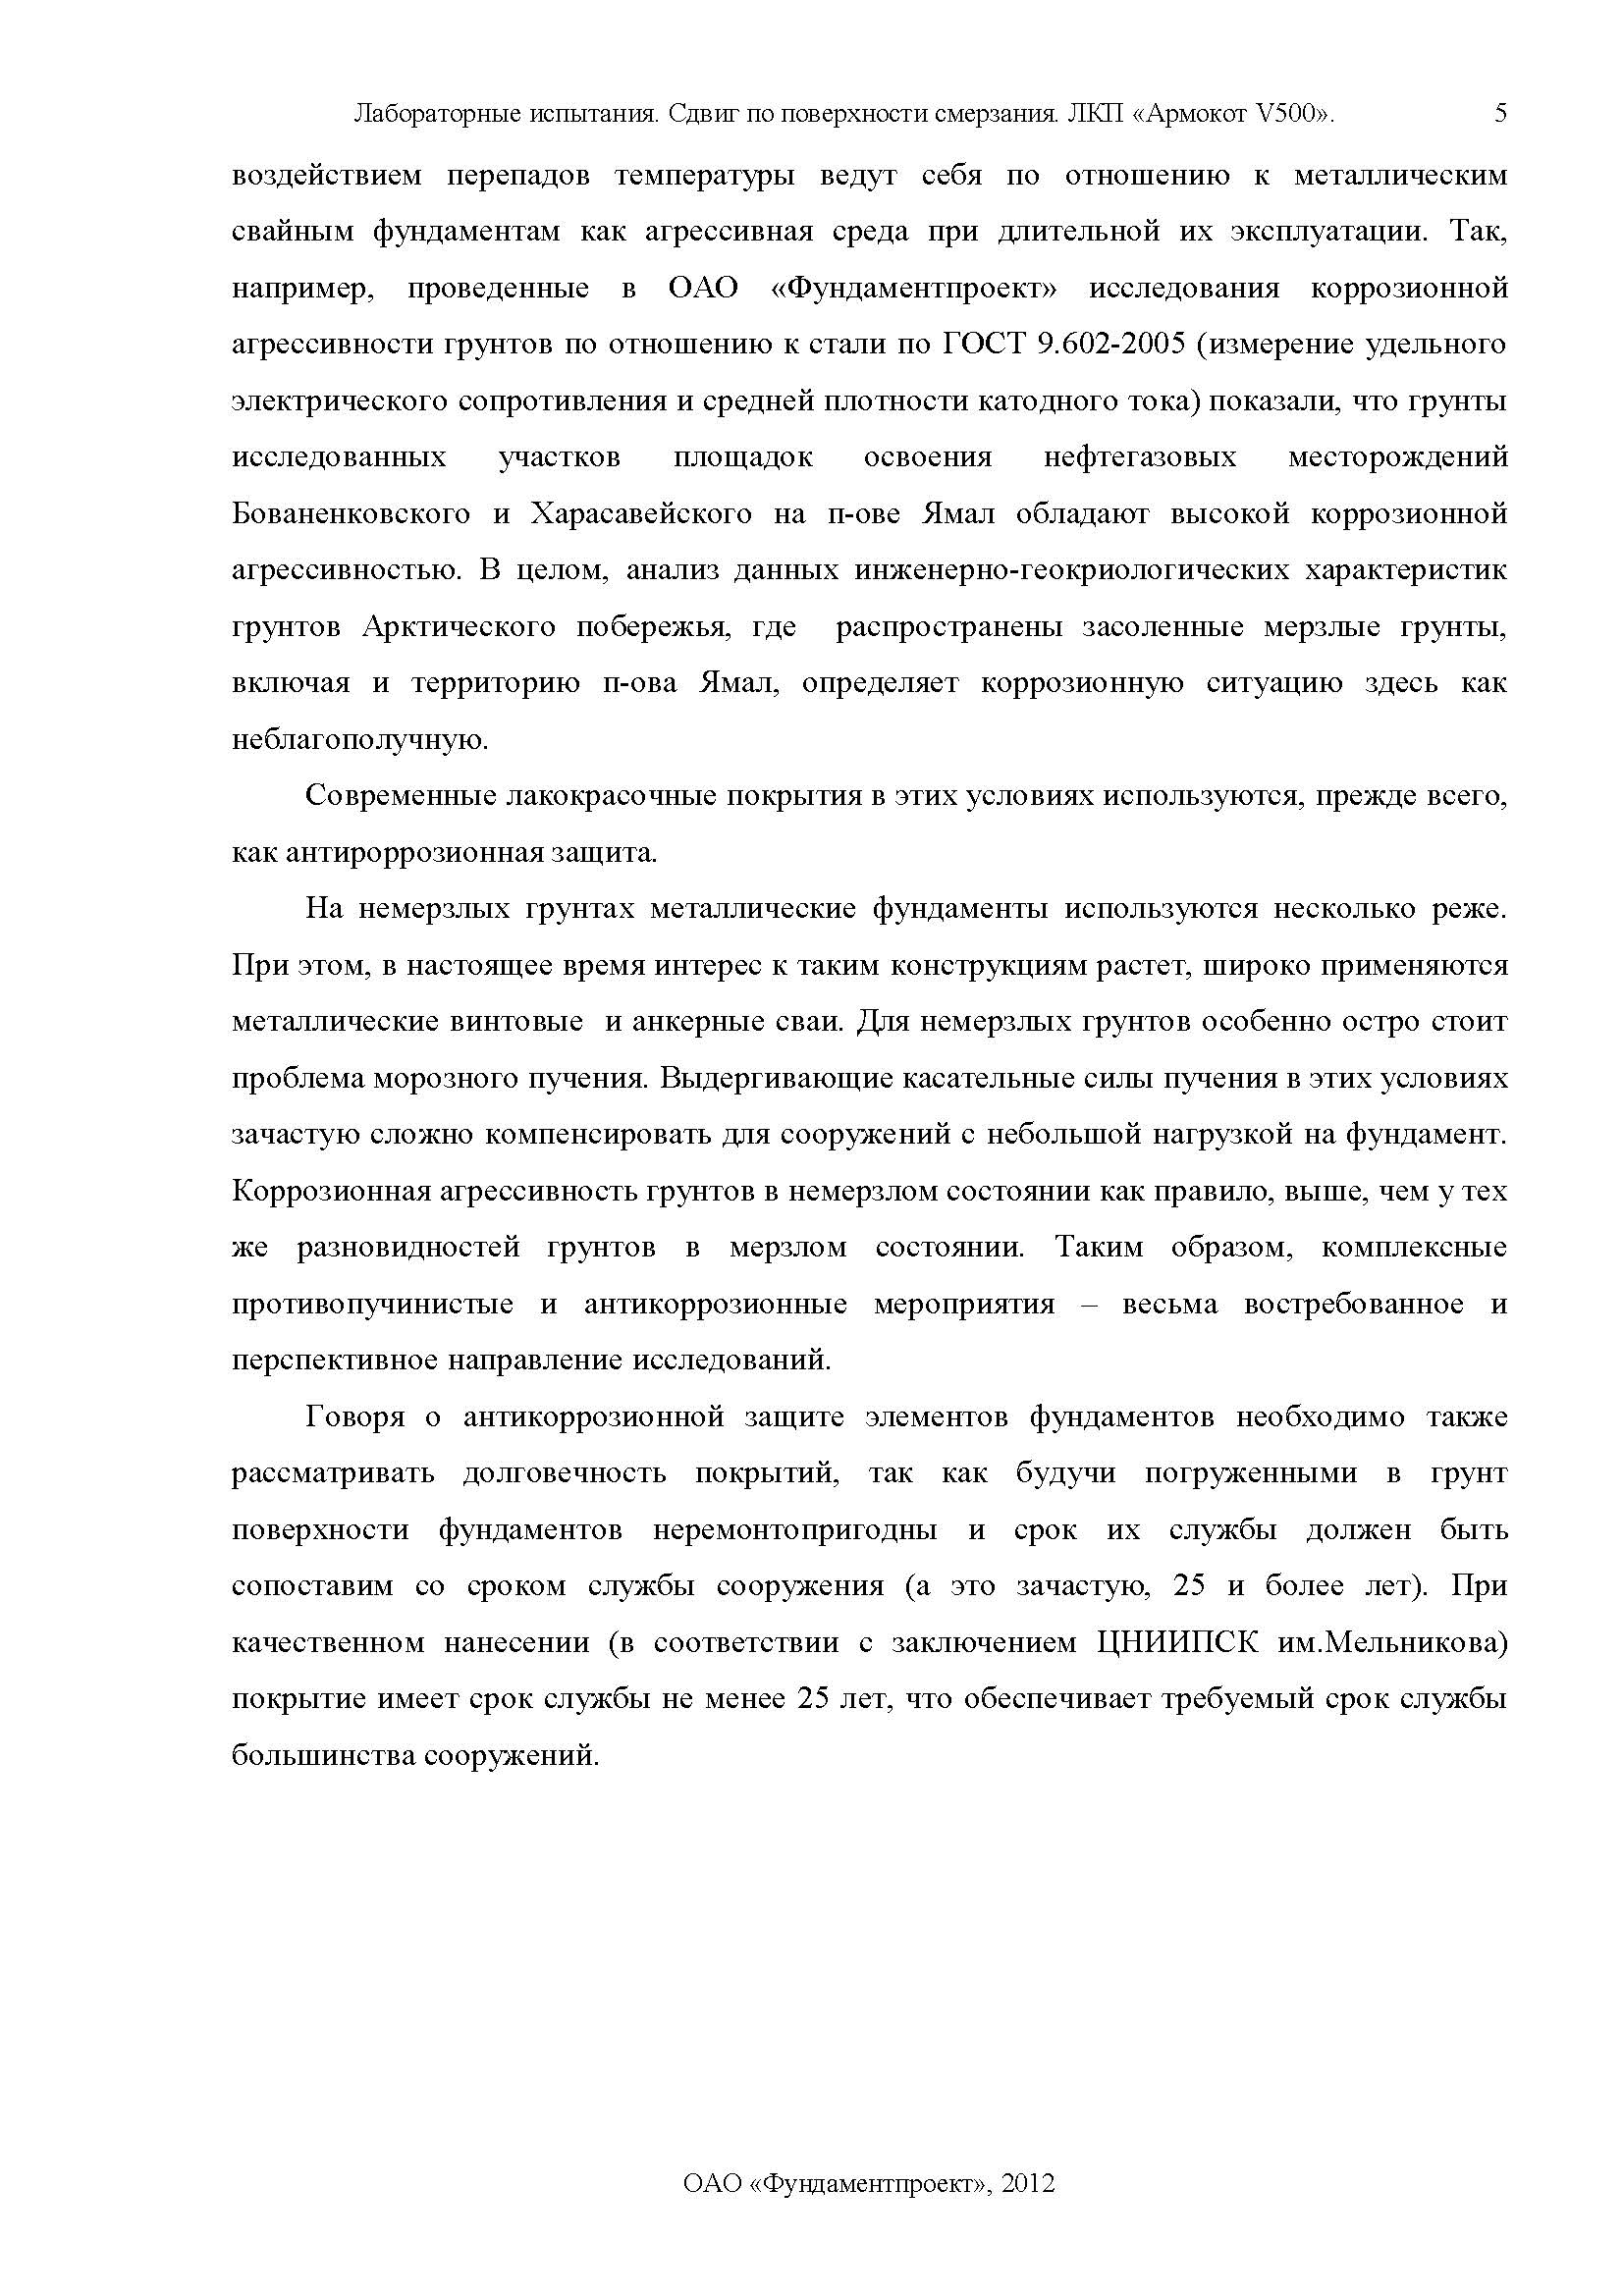 Отчет по сваям Армокот V500 Фундаментпроект_Страница_05